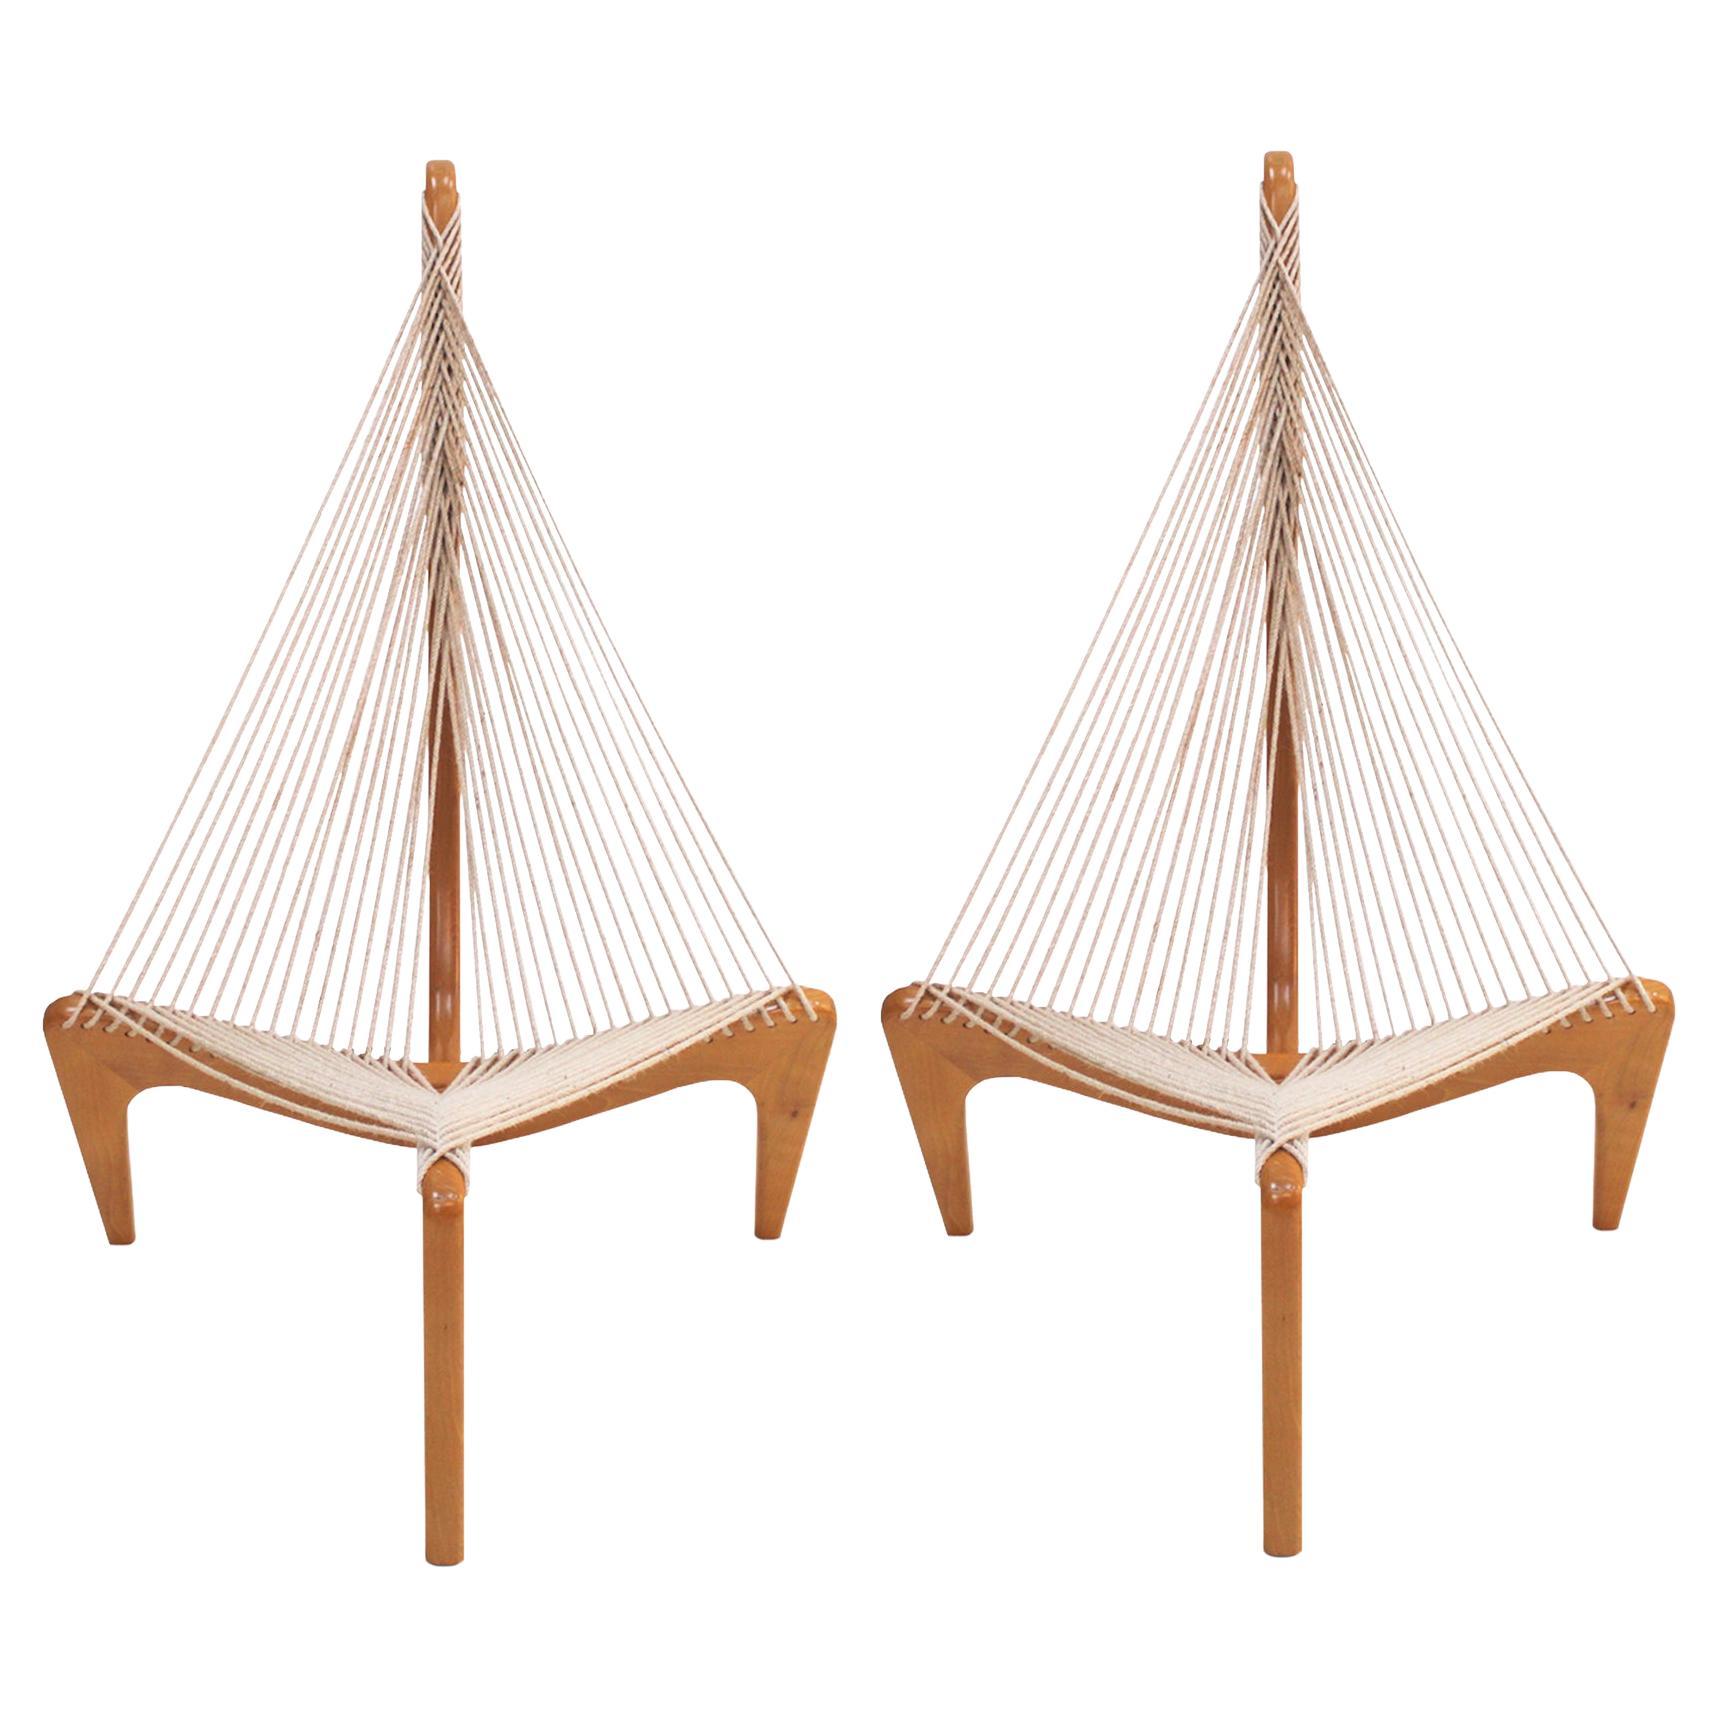 Mid-century Modern Jørgen Høvelskov Rope Wood and String Sculpture Harp Chairs